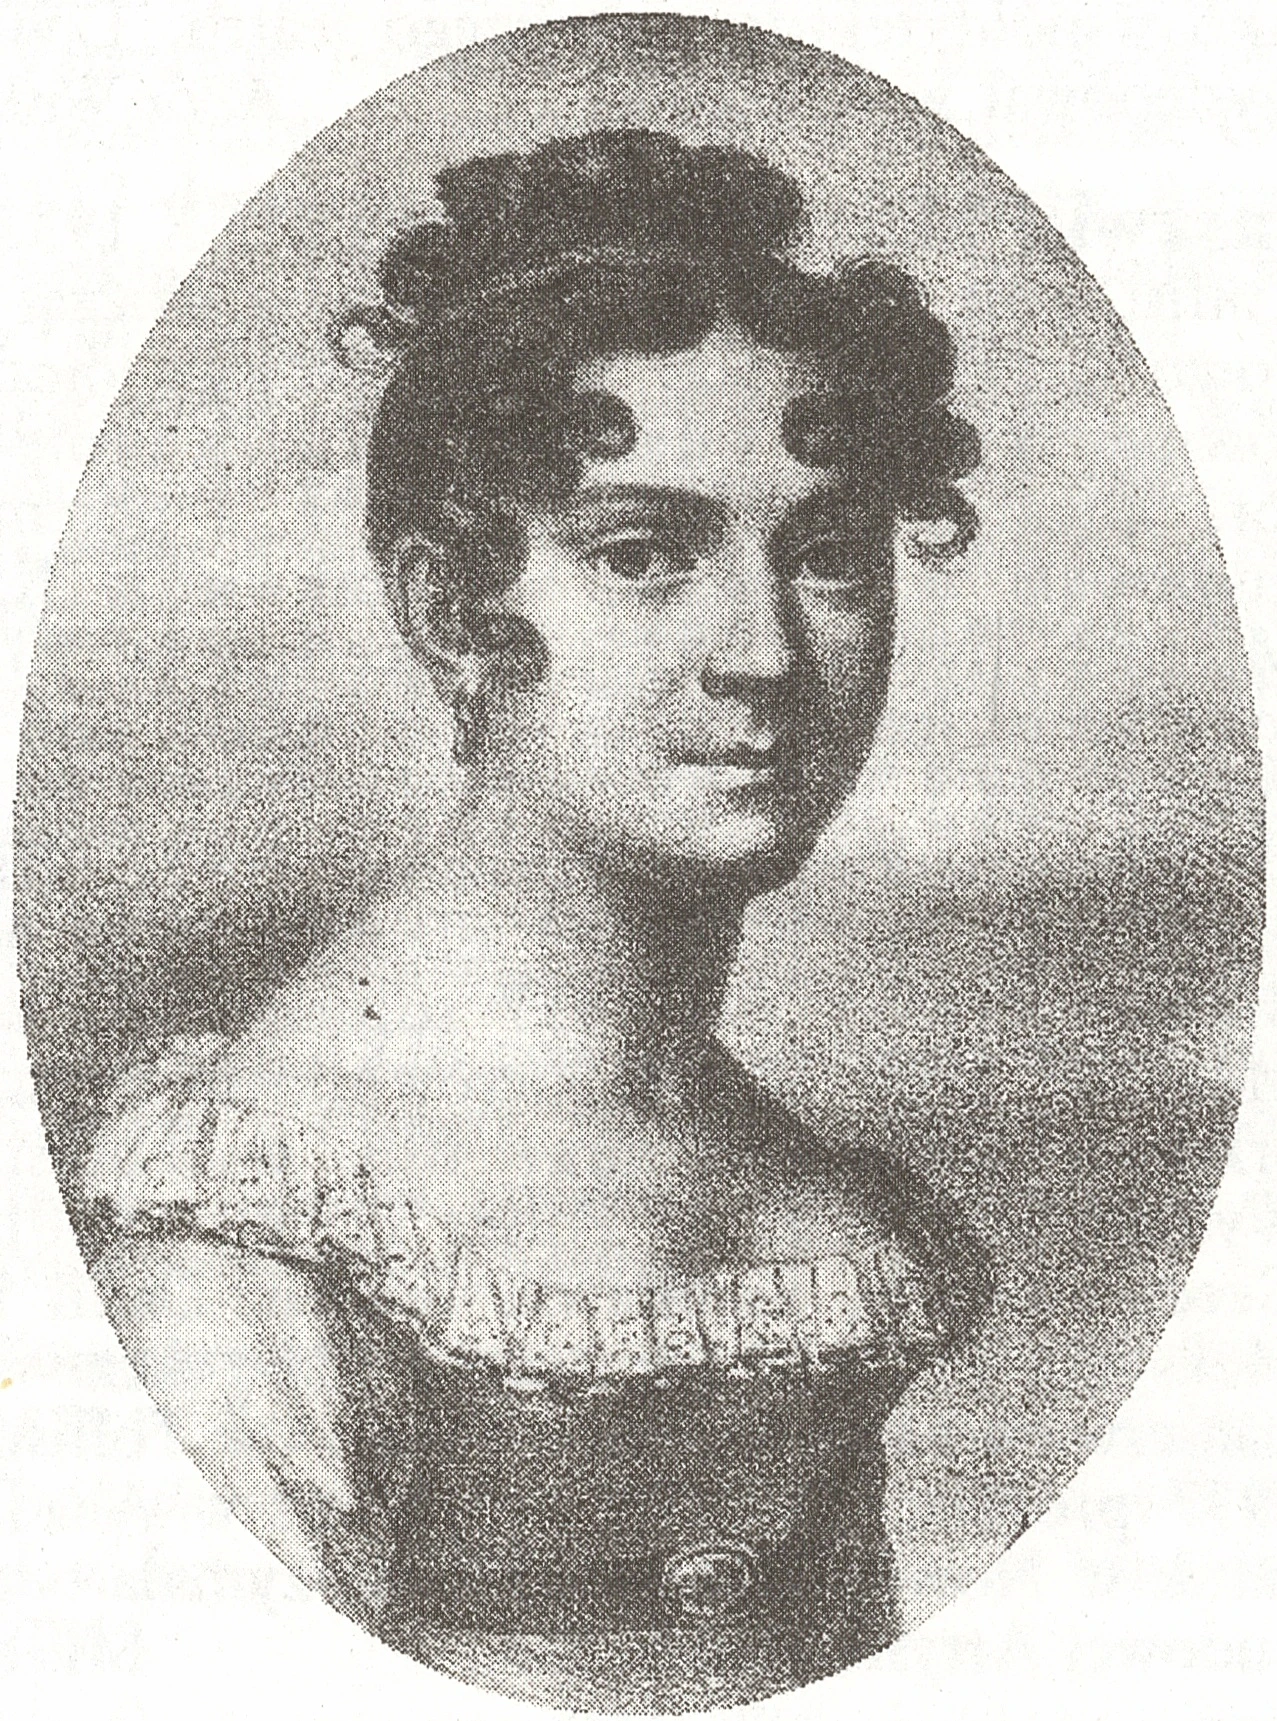 Jasińska, Magdalena